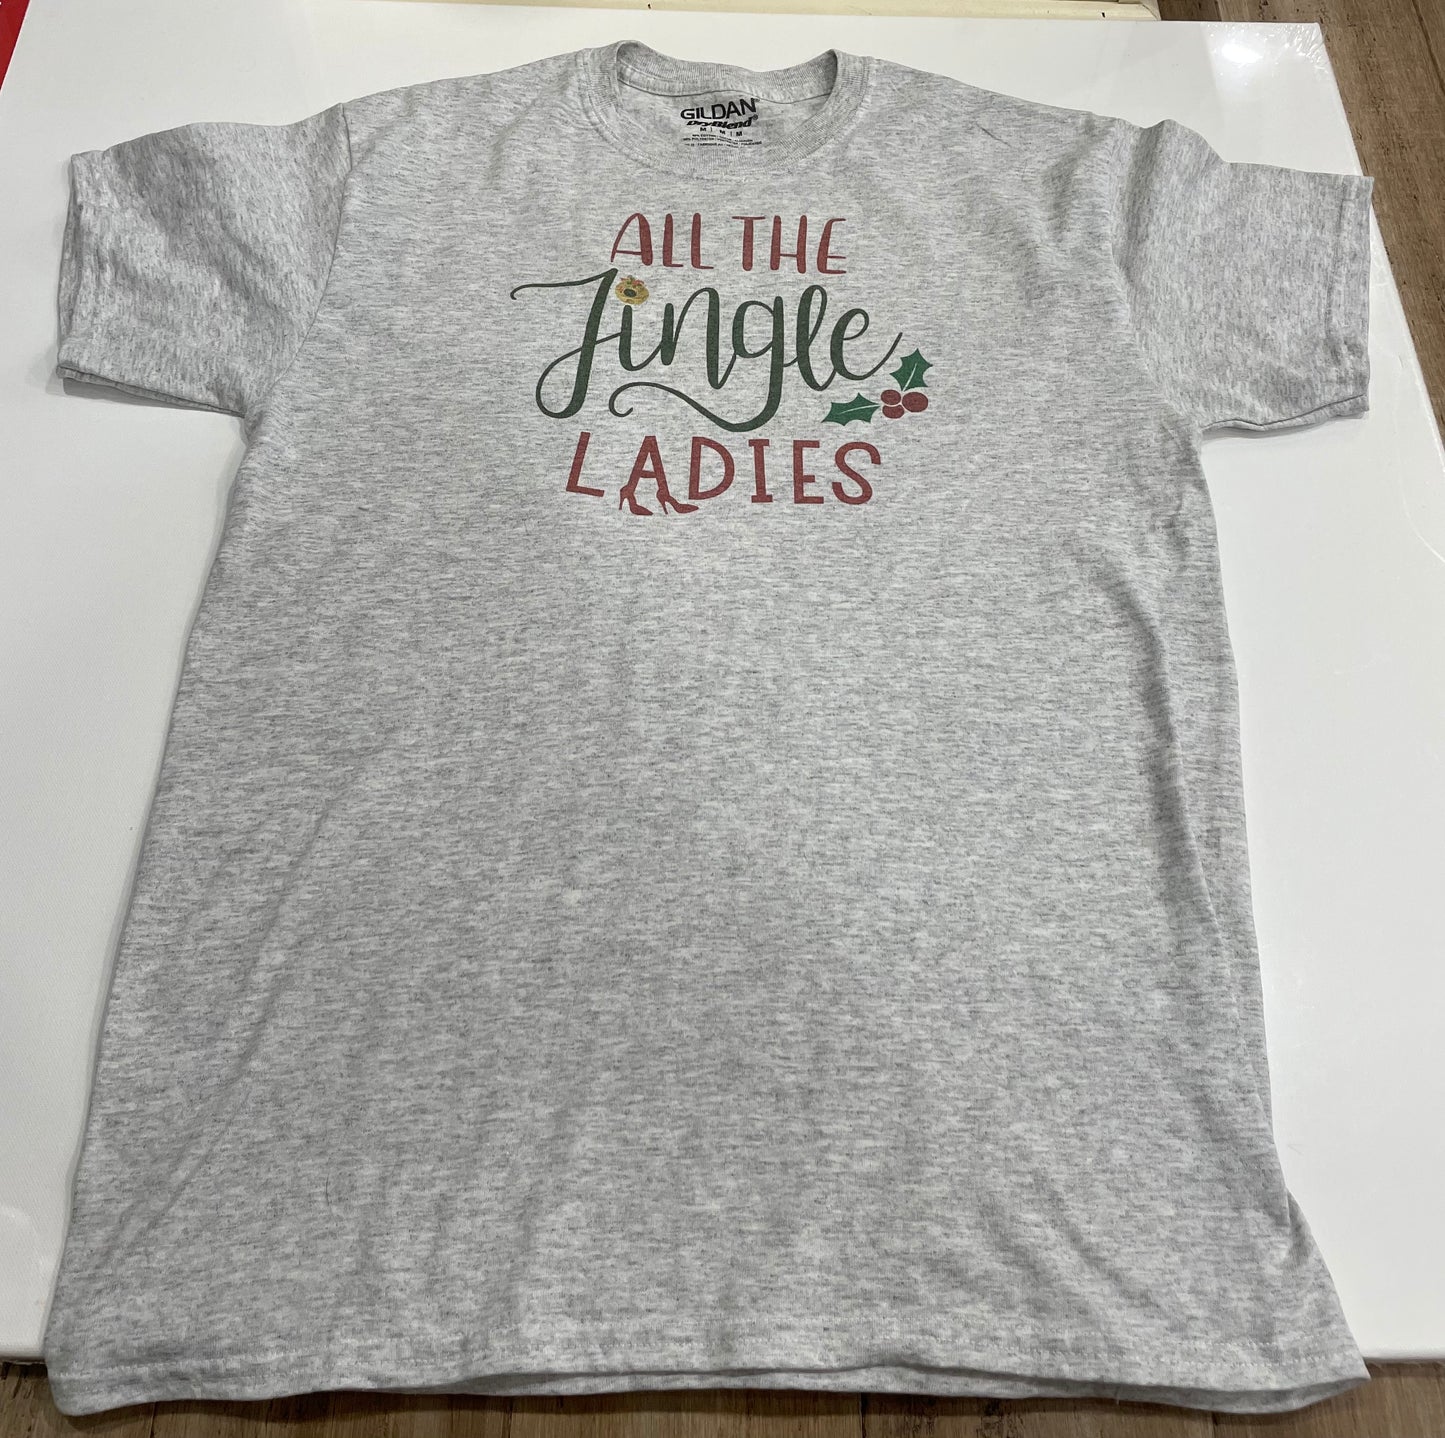 Adult size medium t-shirt